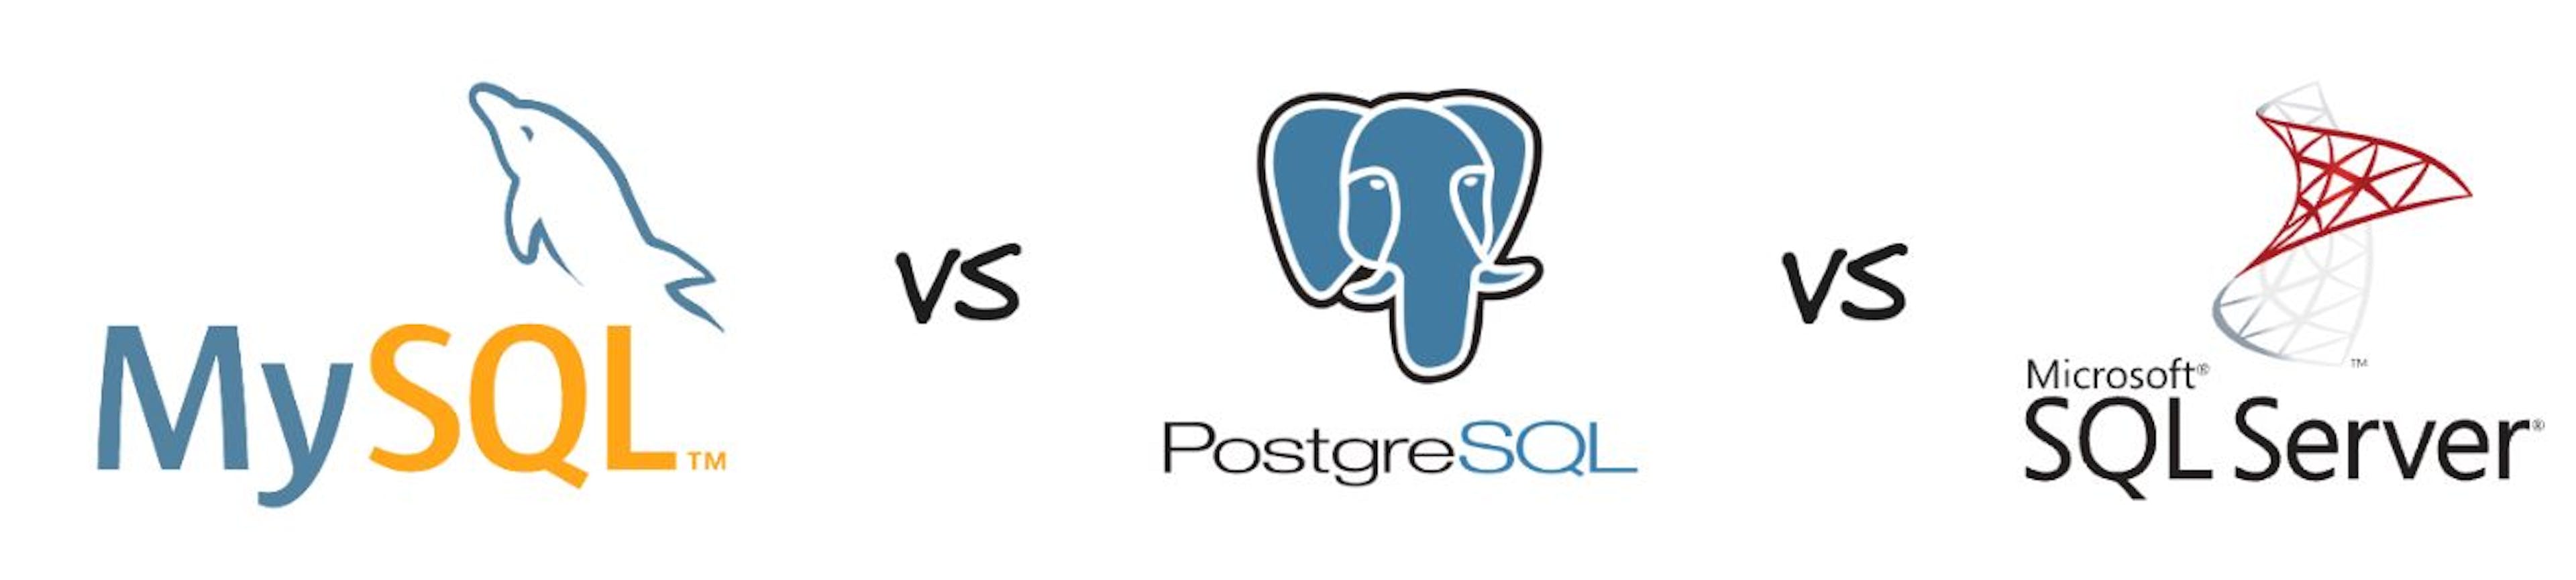 featured image - MySQL 松散扫描优化：针对 PostgreSQL 和 Microsoft 的性能比较评估